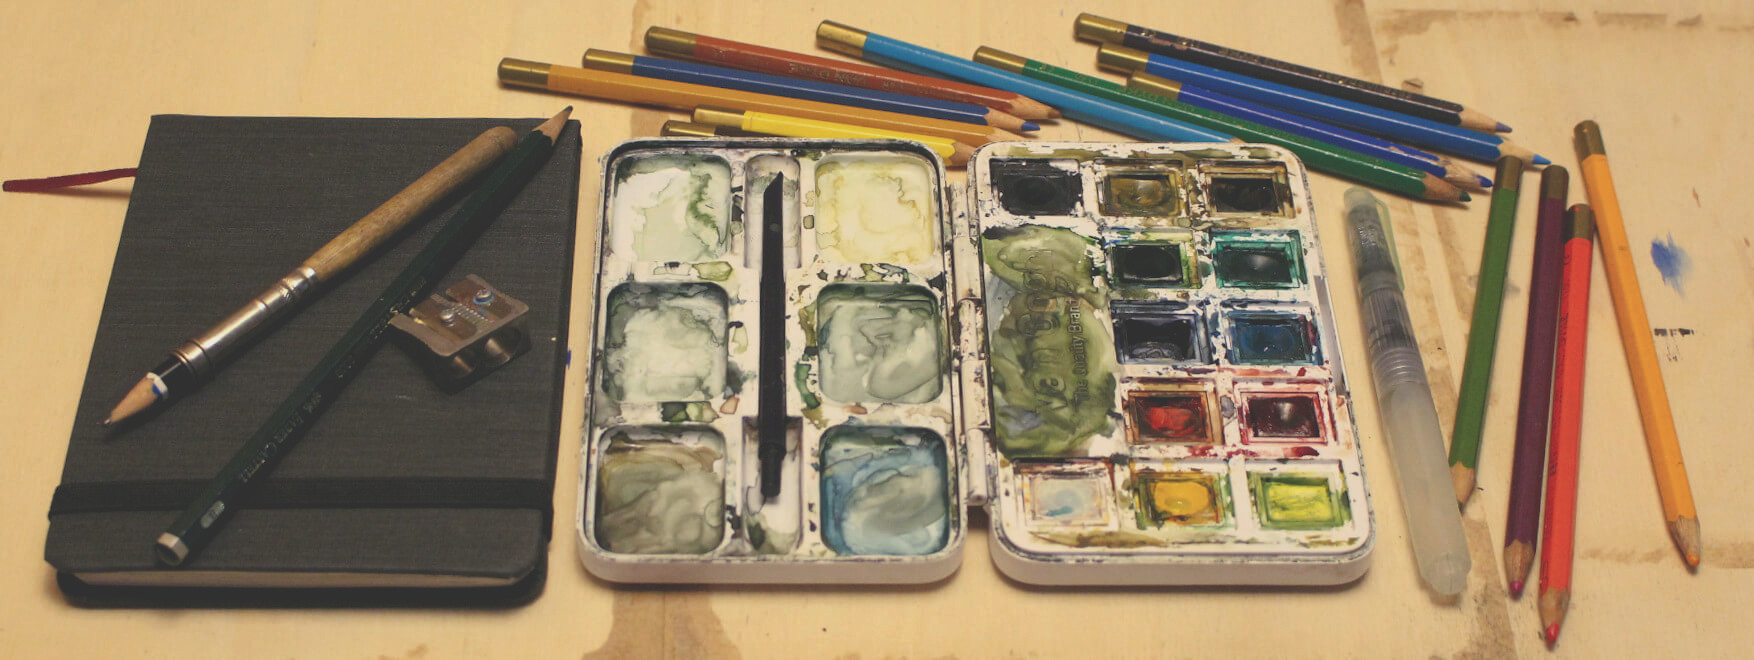 materials: sketchbook, colored pencils, watercolor set and pocket brush